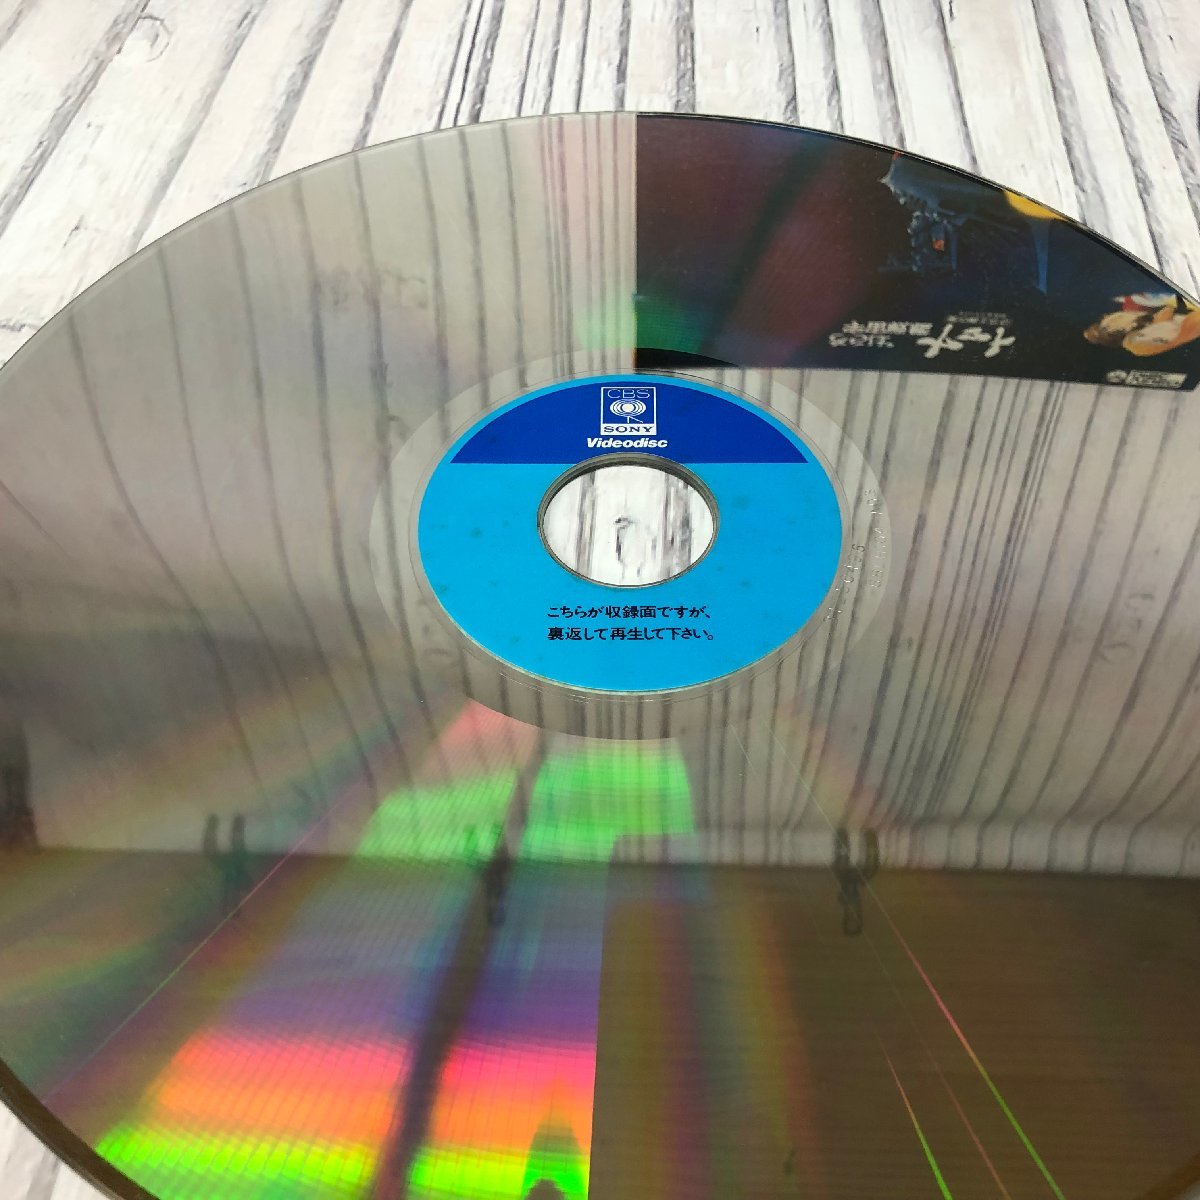 m001 B(80) ビデオディスク さらば宇宙戦艦ヤマト 愛の戦士たち 松本零士 劇場版 オリジナル全長版 152分 VHD VIDEO DISC レーザービジョン_画像5